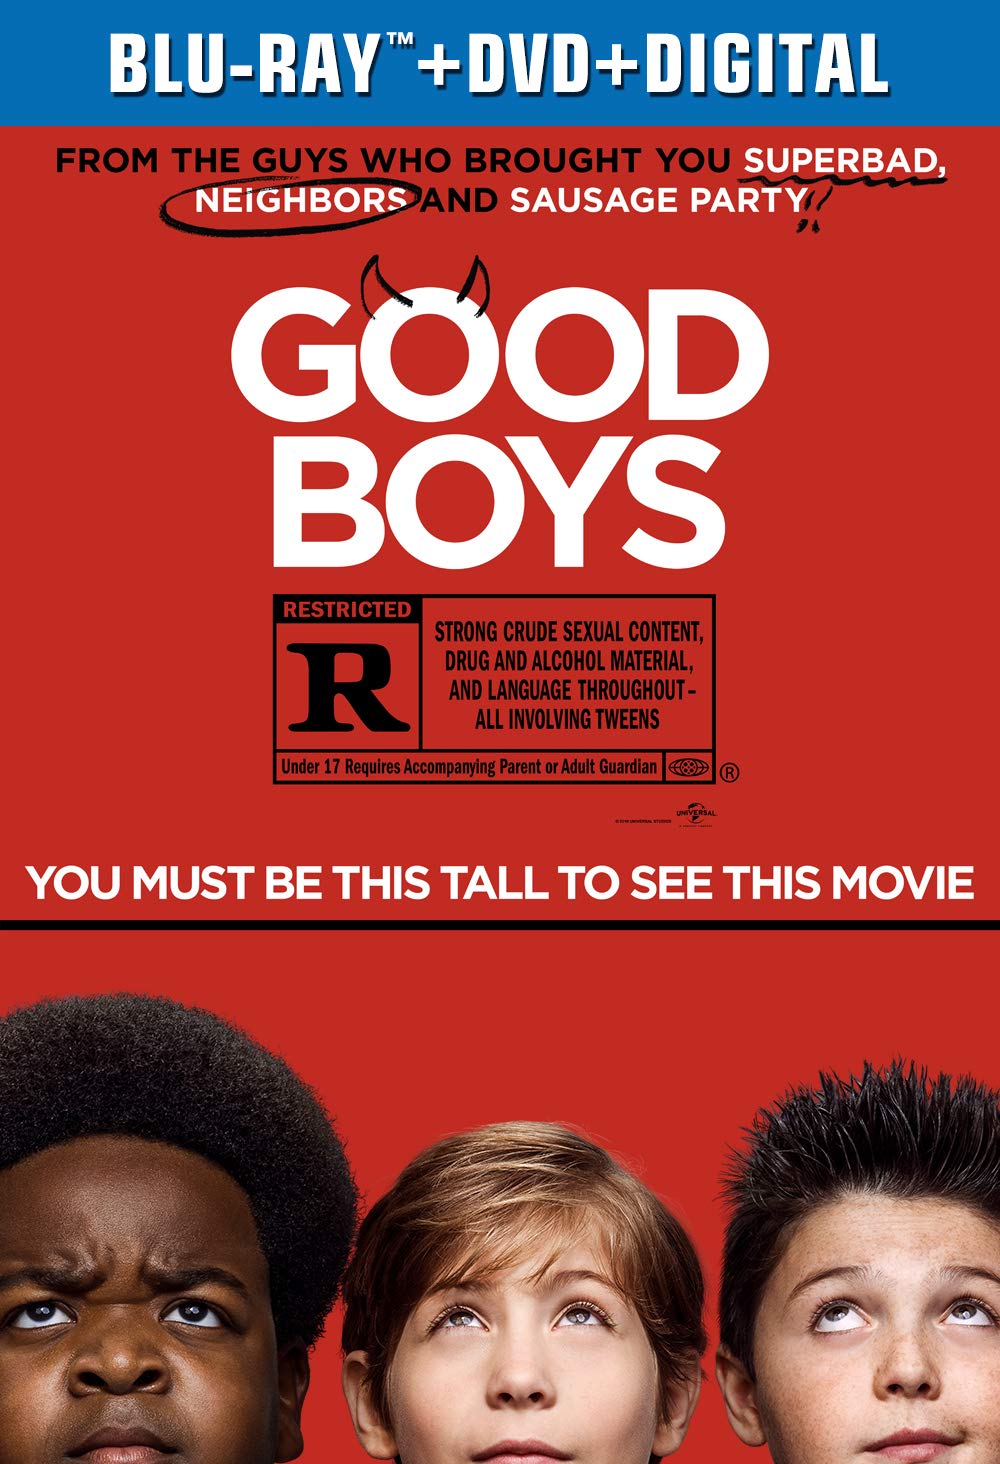 Good Boys (DVD + Digital) - Blu-ray [ 2019 ]  - Comedy Movies On Blu-ray - Movies On GRUV